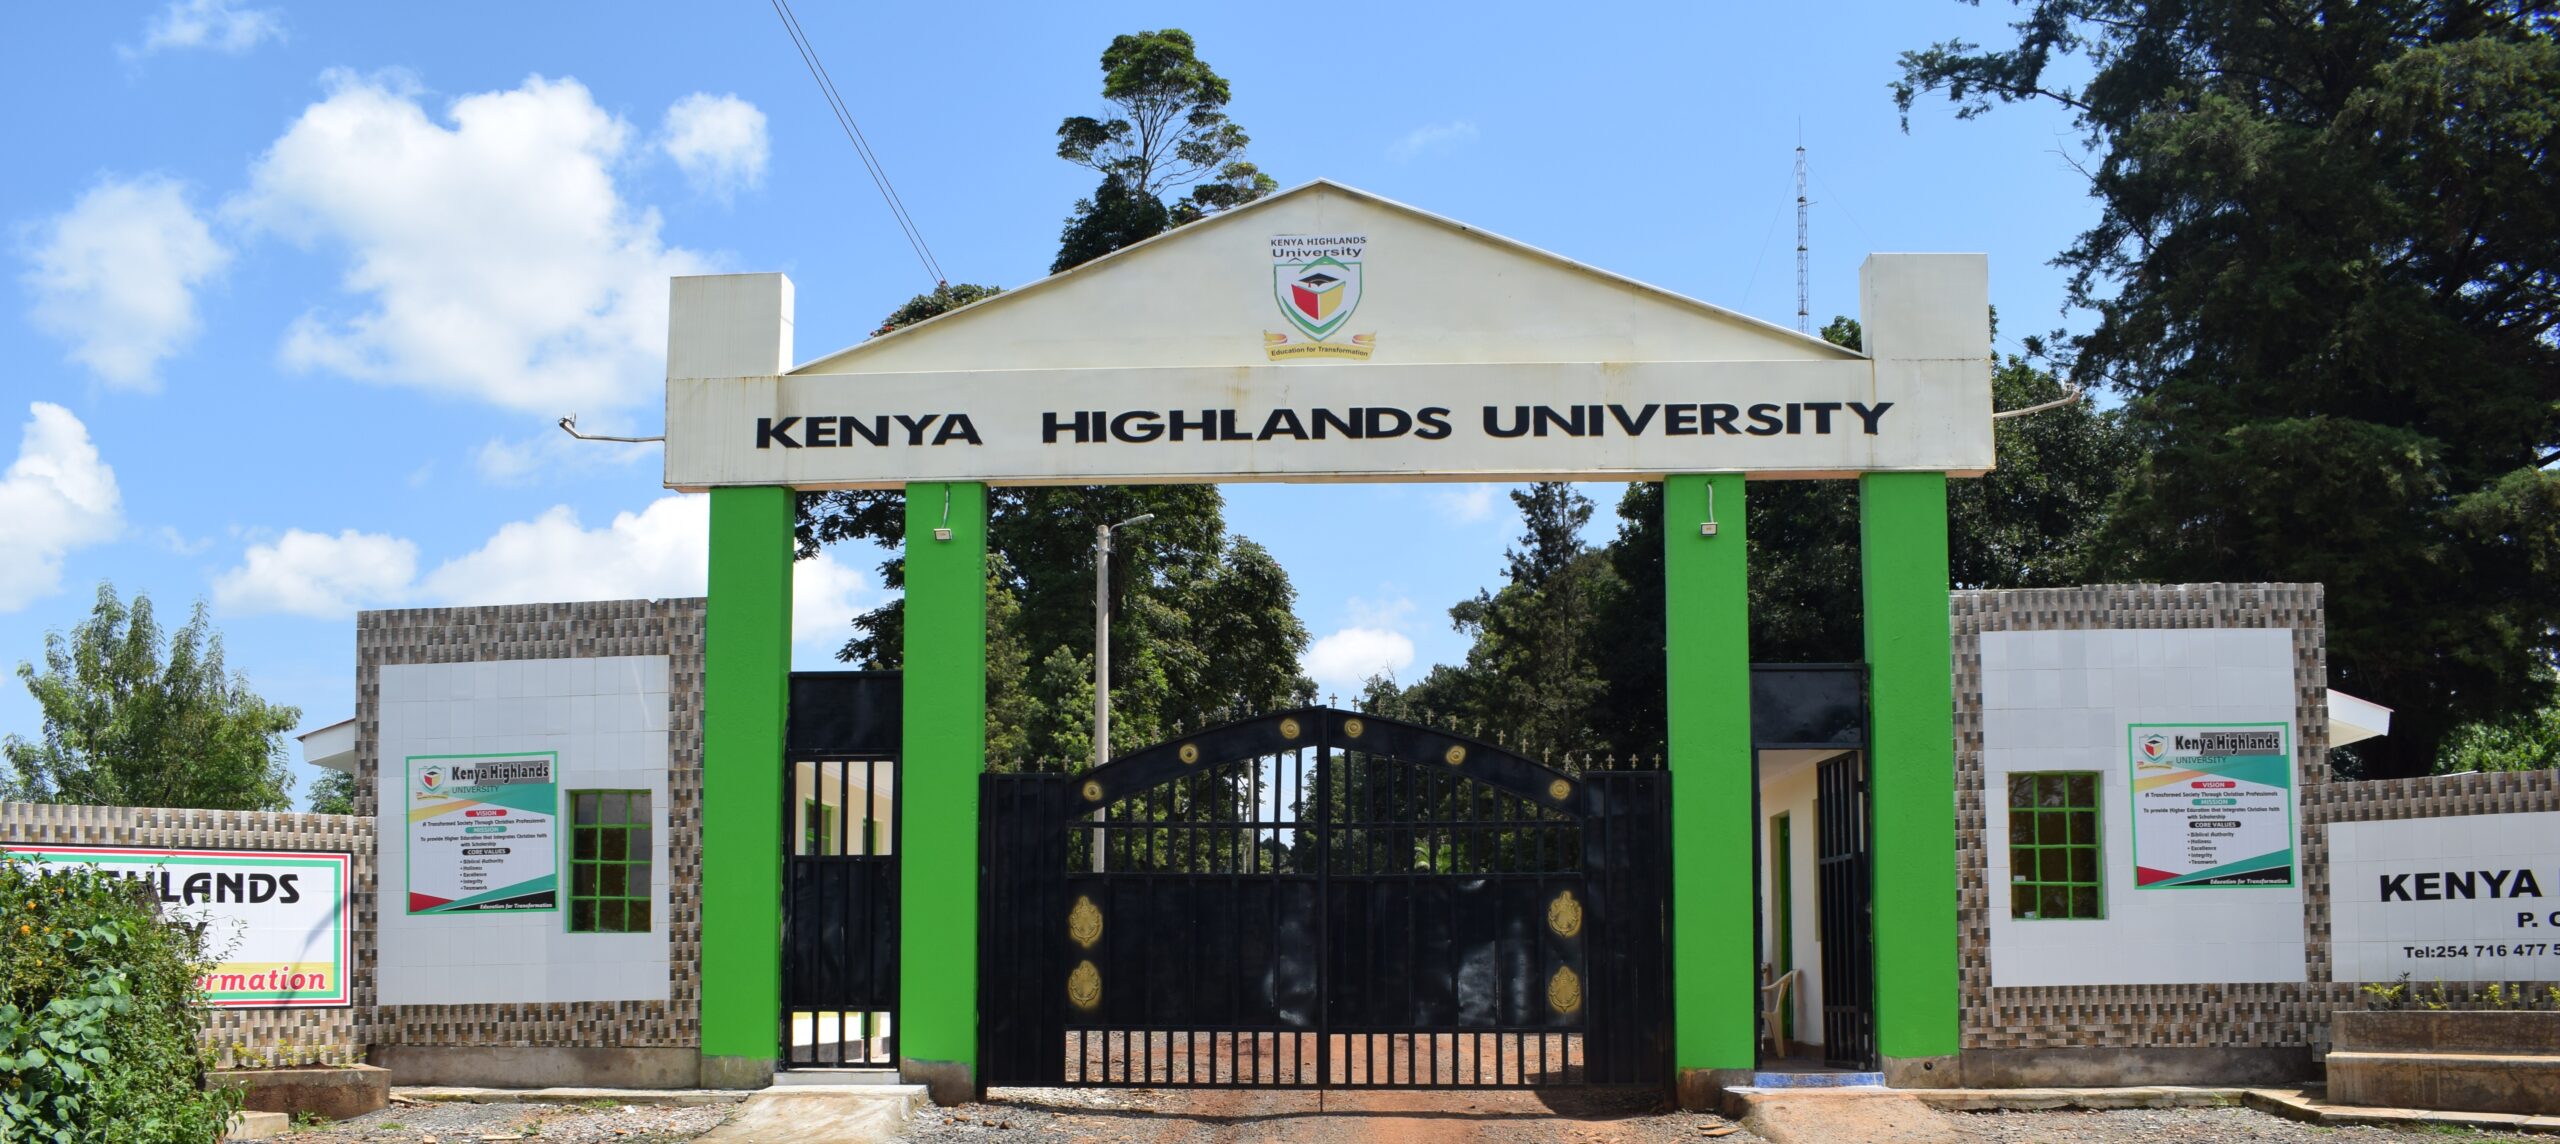 Welcome to Kenya Highlands University!